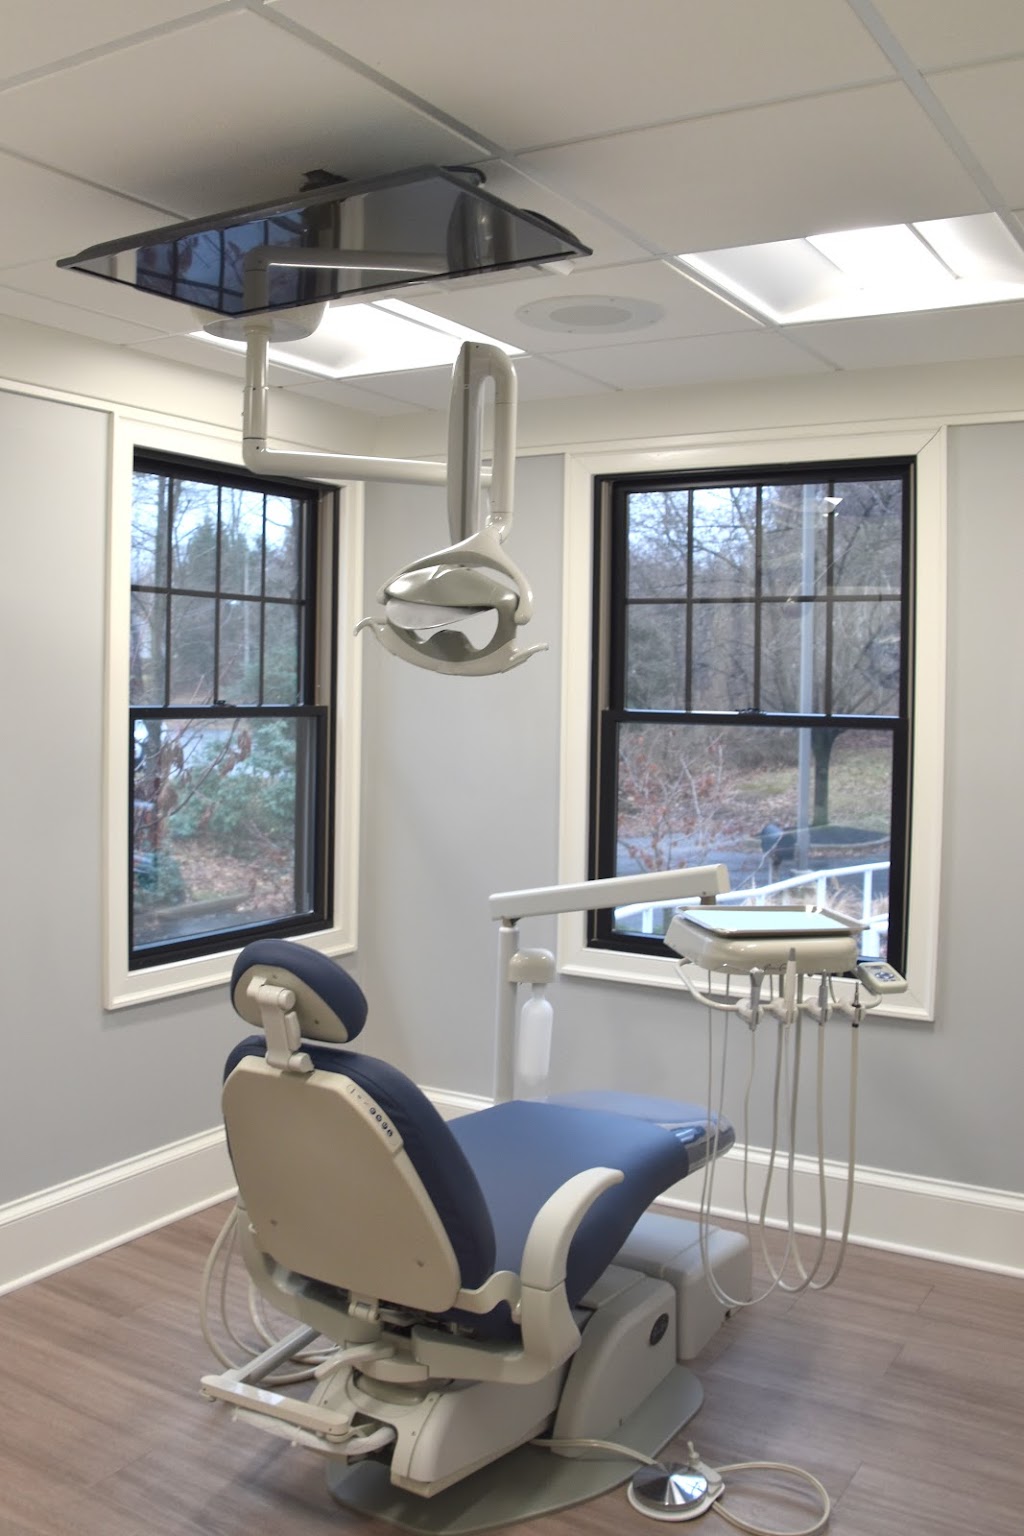 Middletown Pediatric Dental | 12 Tindall Rd, Middletown Township, NJ 07748 | Phone: (732) 671-8785